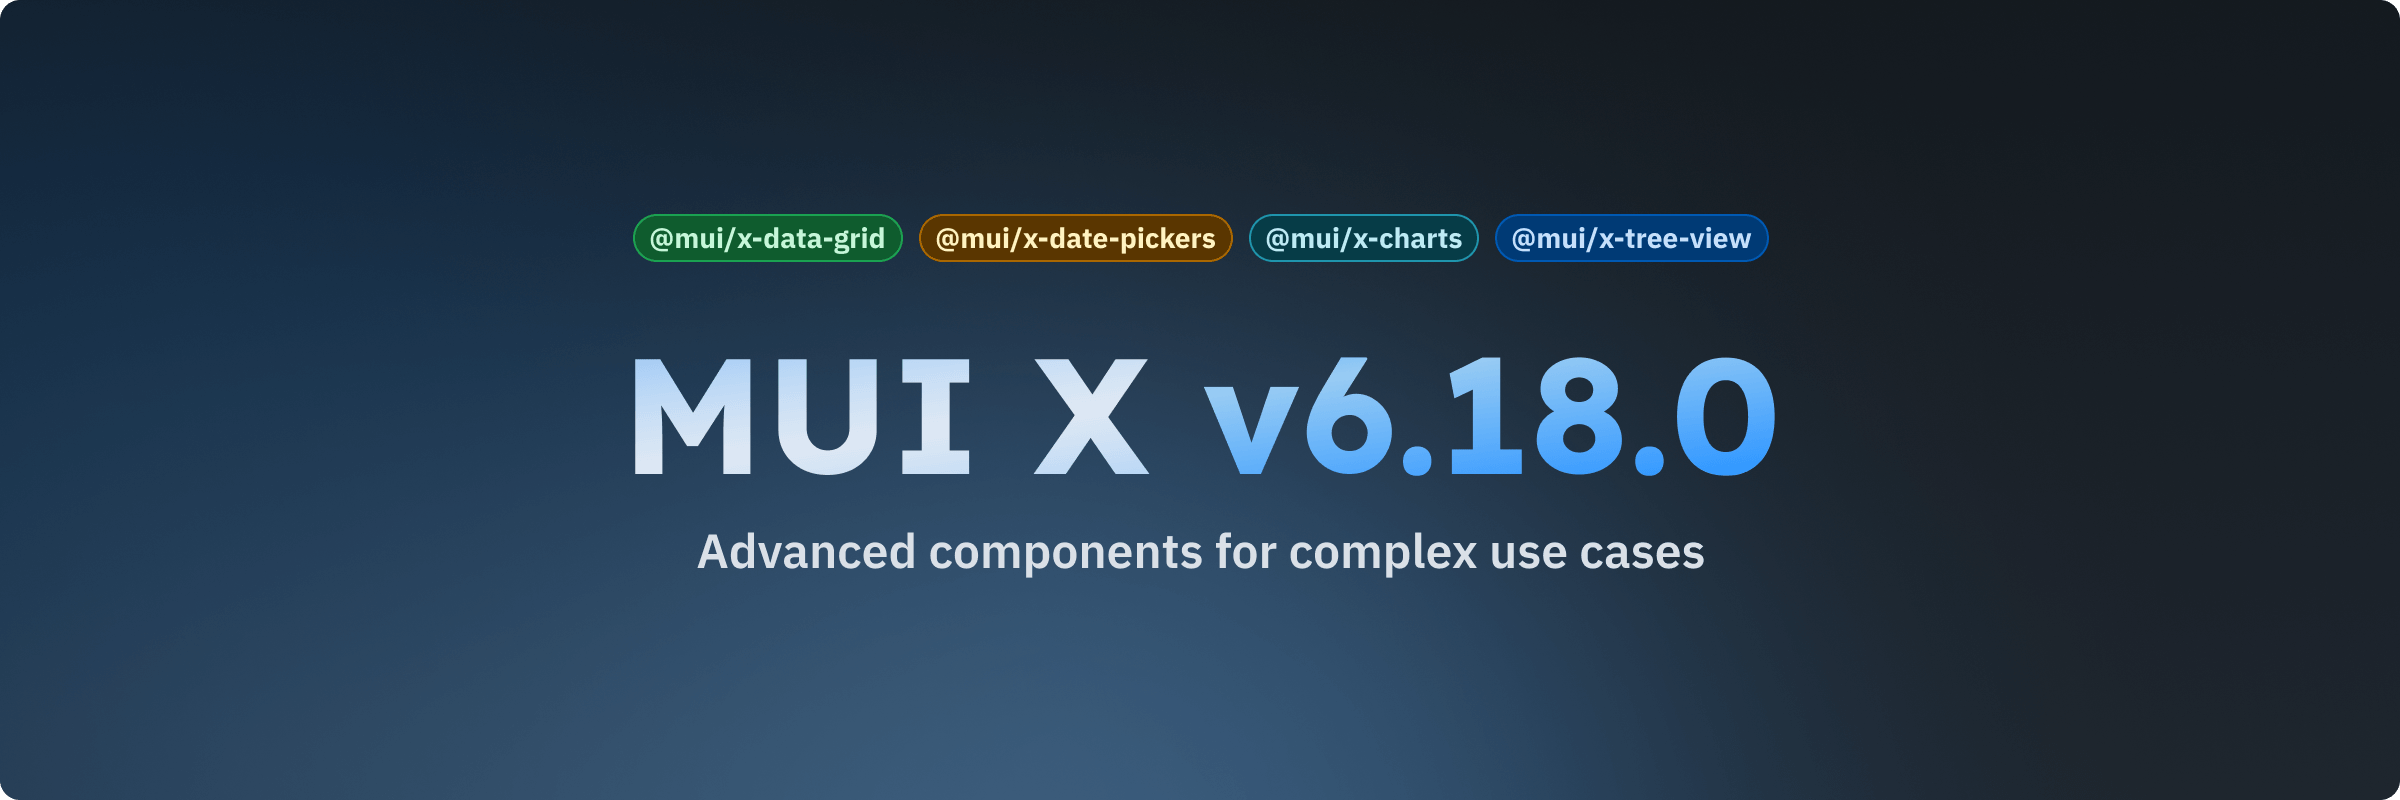 MUI X v6.18.0 release